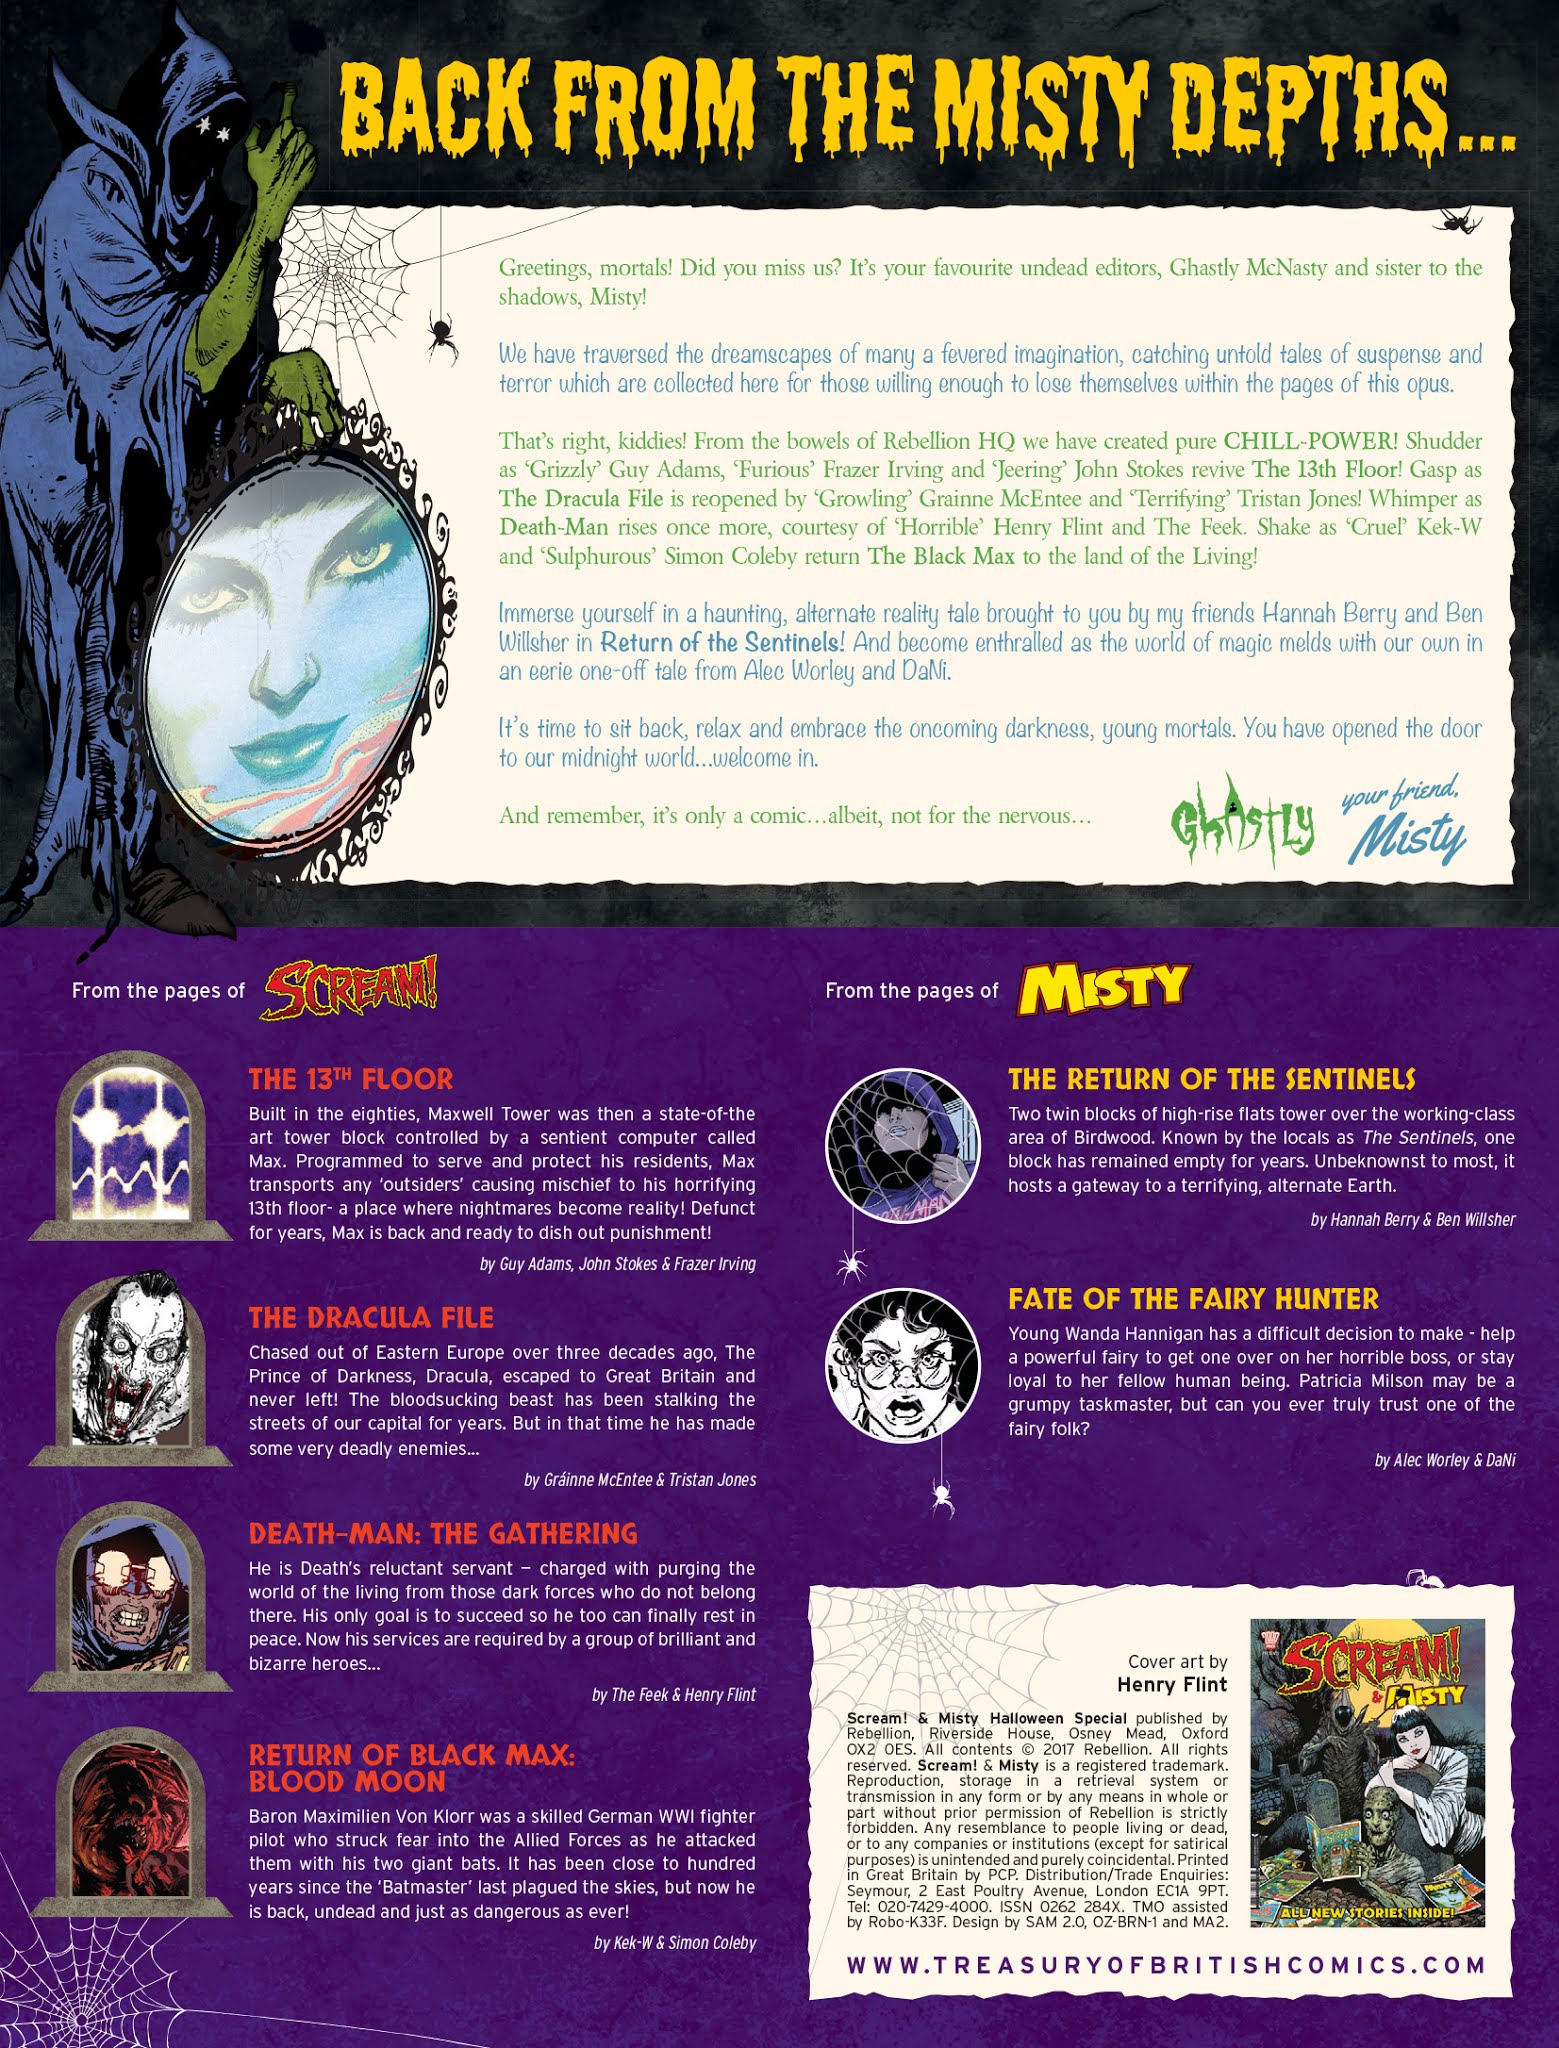 Read online Scream! & Misty Halloween Special comic -  Issue #1 - 2